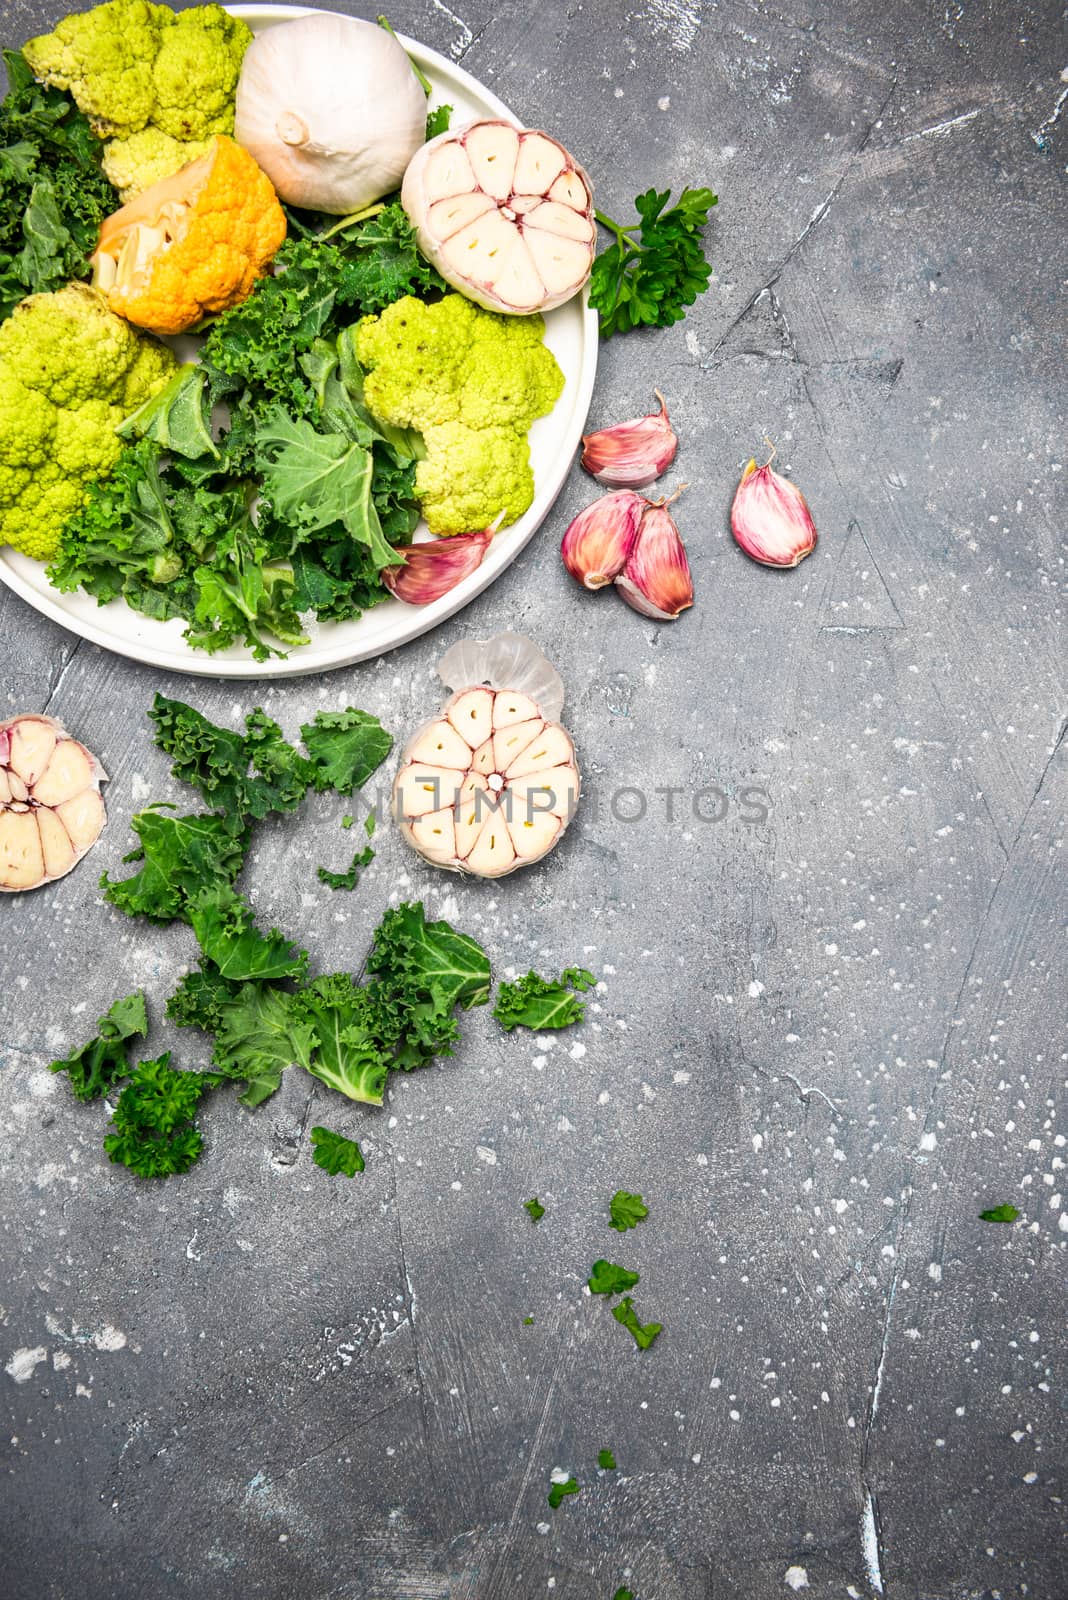 Raw Organic Market Fresh Vegetables. Healthy Clean eating Food Background.